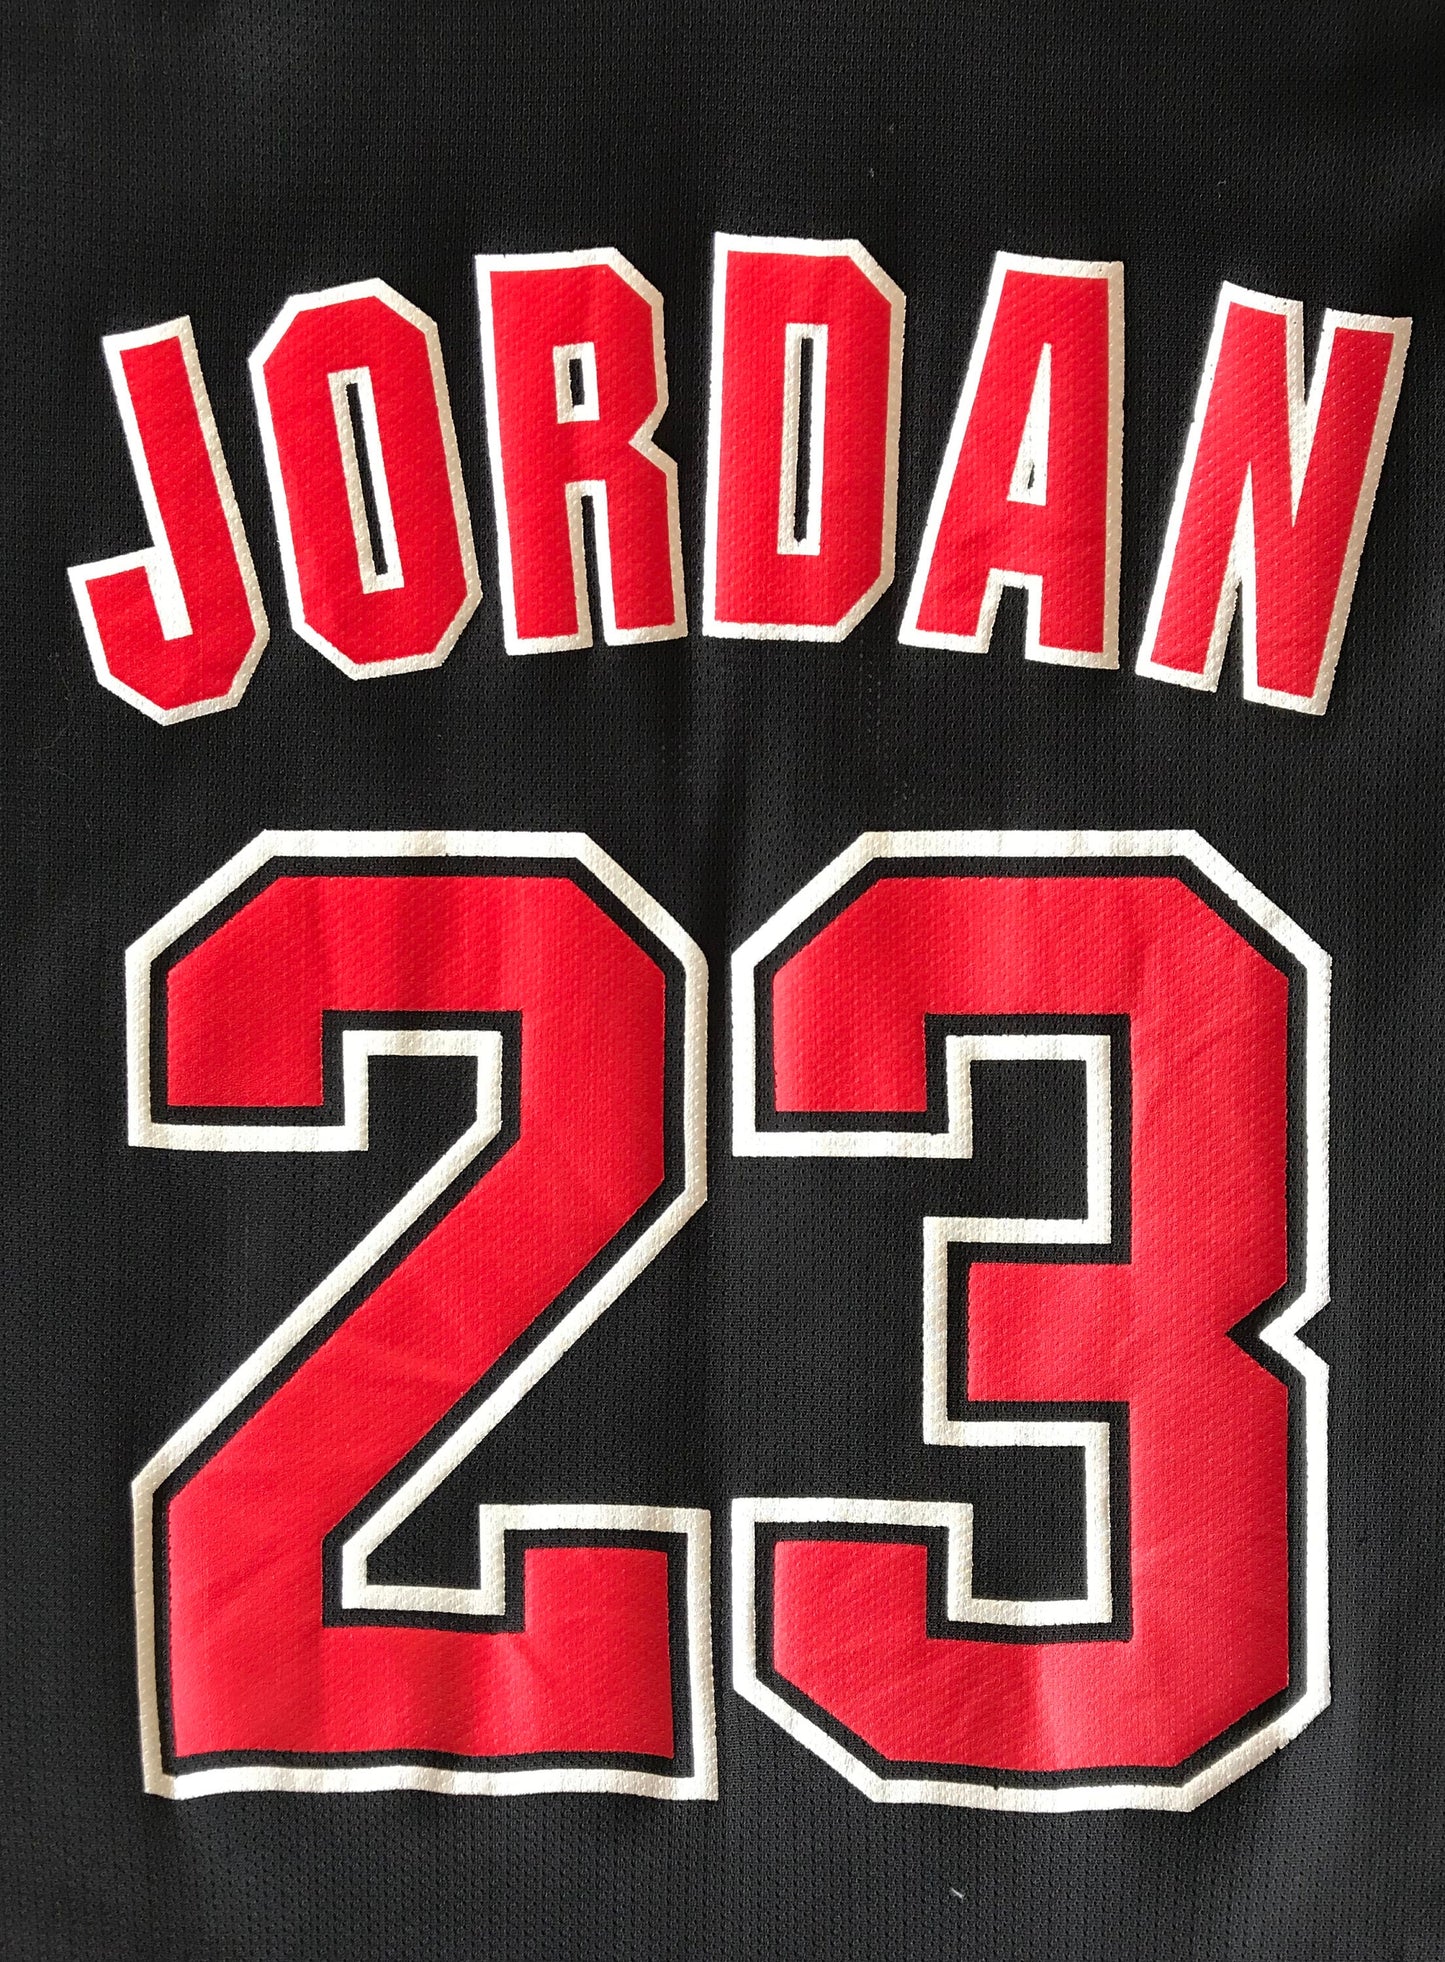 Size: 48 Vintage Champion Jordan Jersey Chicago Bulls #23 NBA  90s